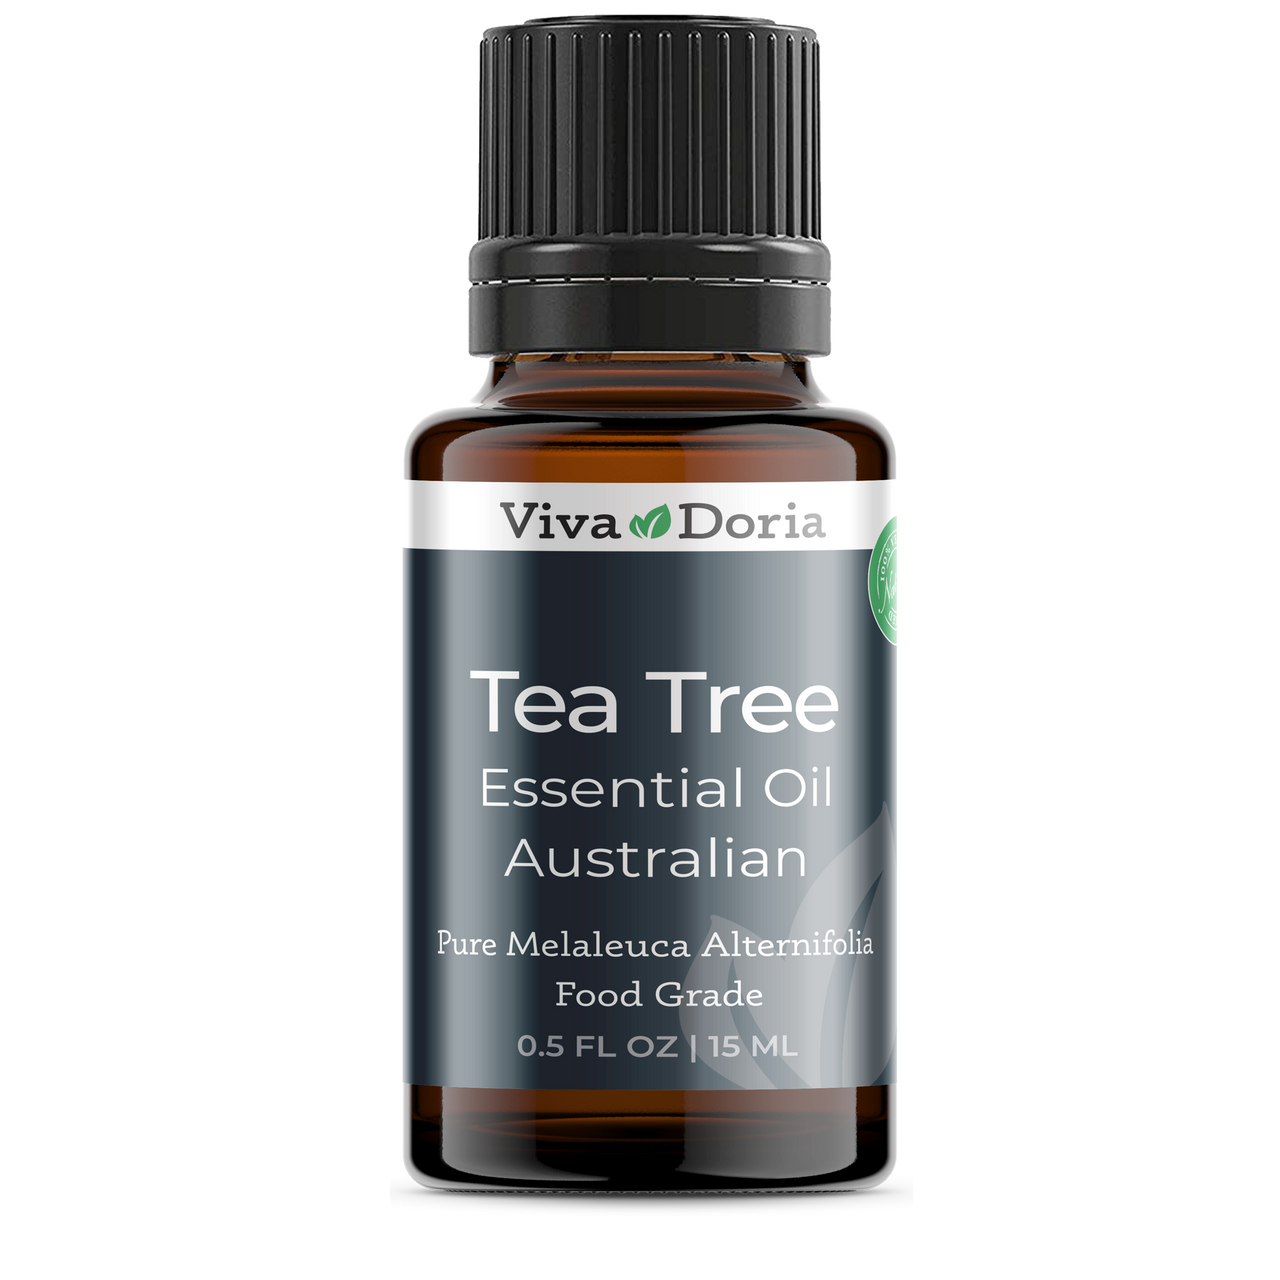 How to Use Tea Tree oil